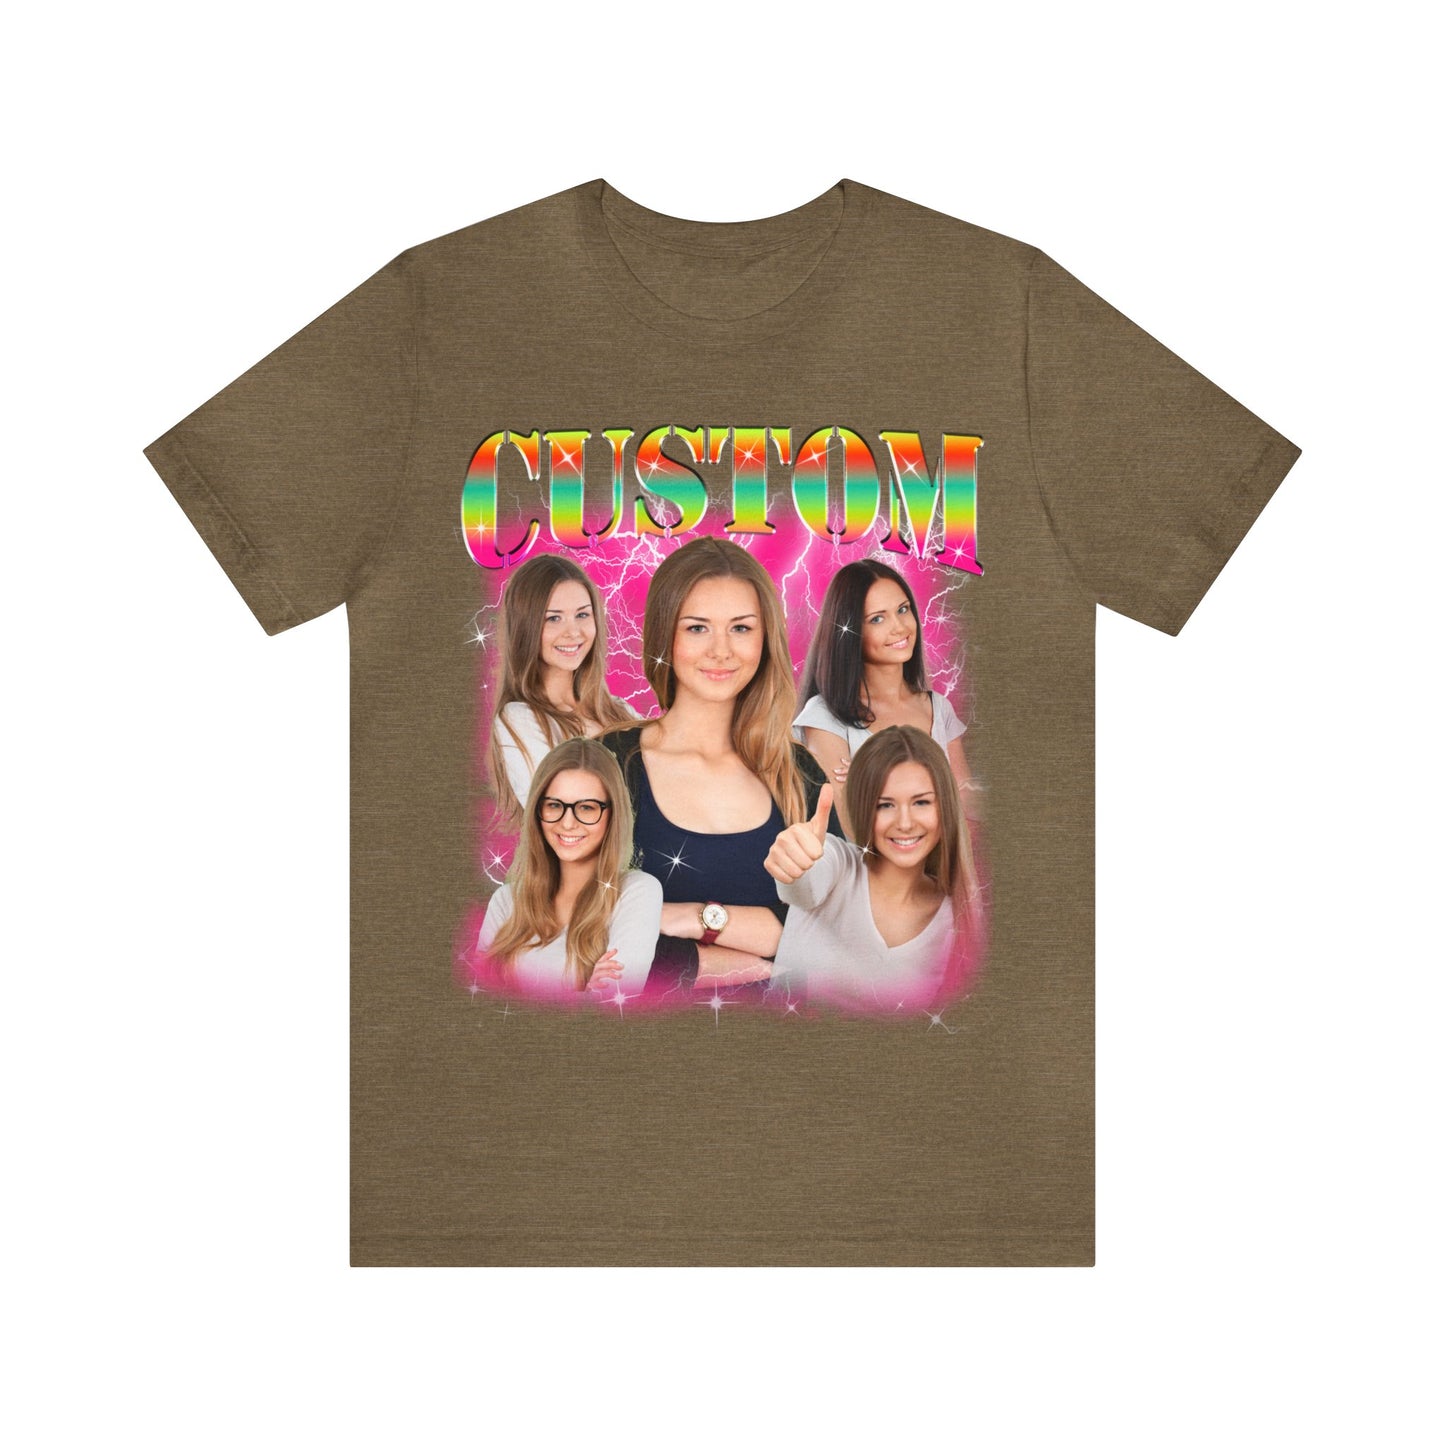 Custom Photo Bootleg Girlfriend Rainbow 90s Retro Vintage T-Shirt, Shirt with Face for Boyfriend Birthday Gift, Pictures Bootleg Tee, T1531